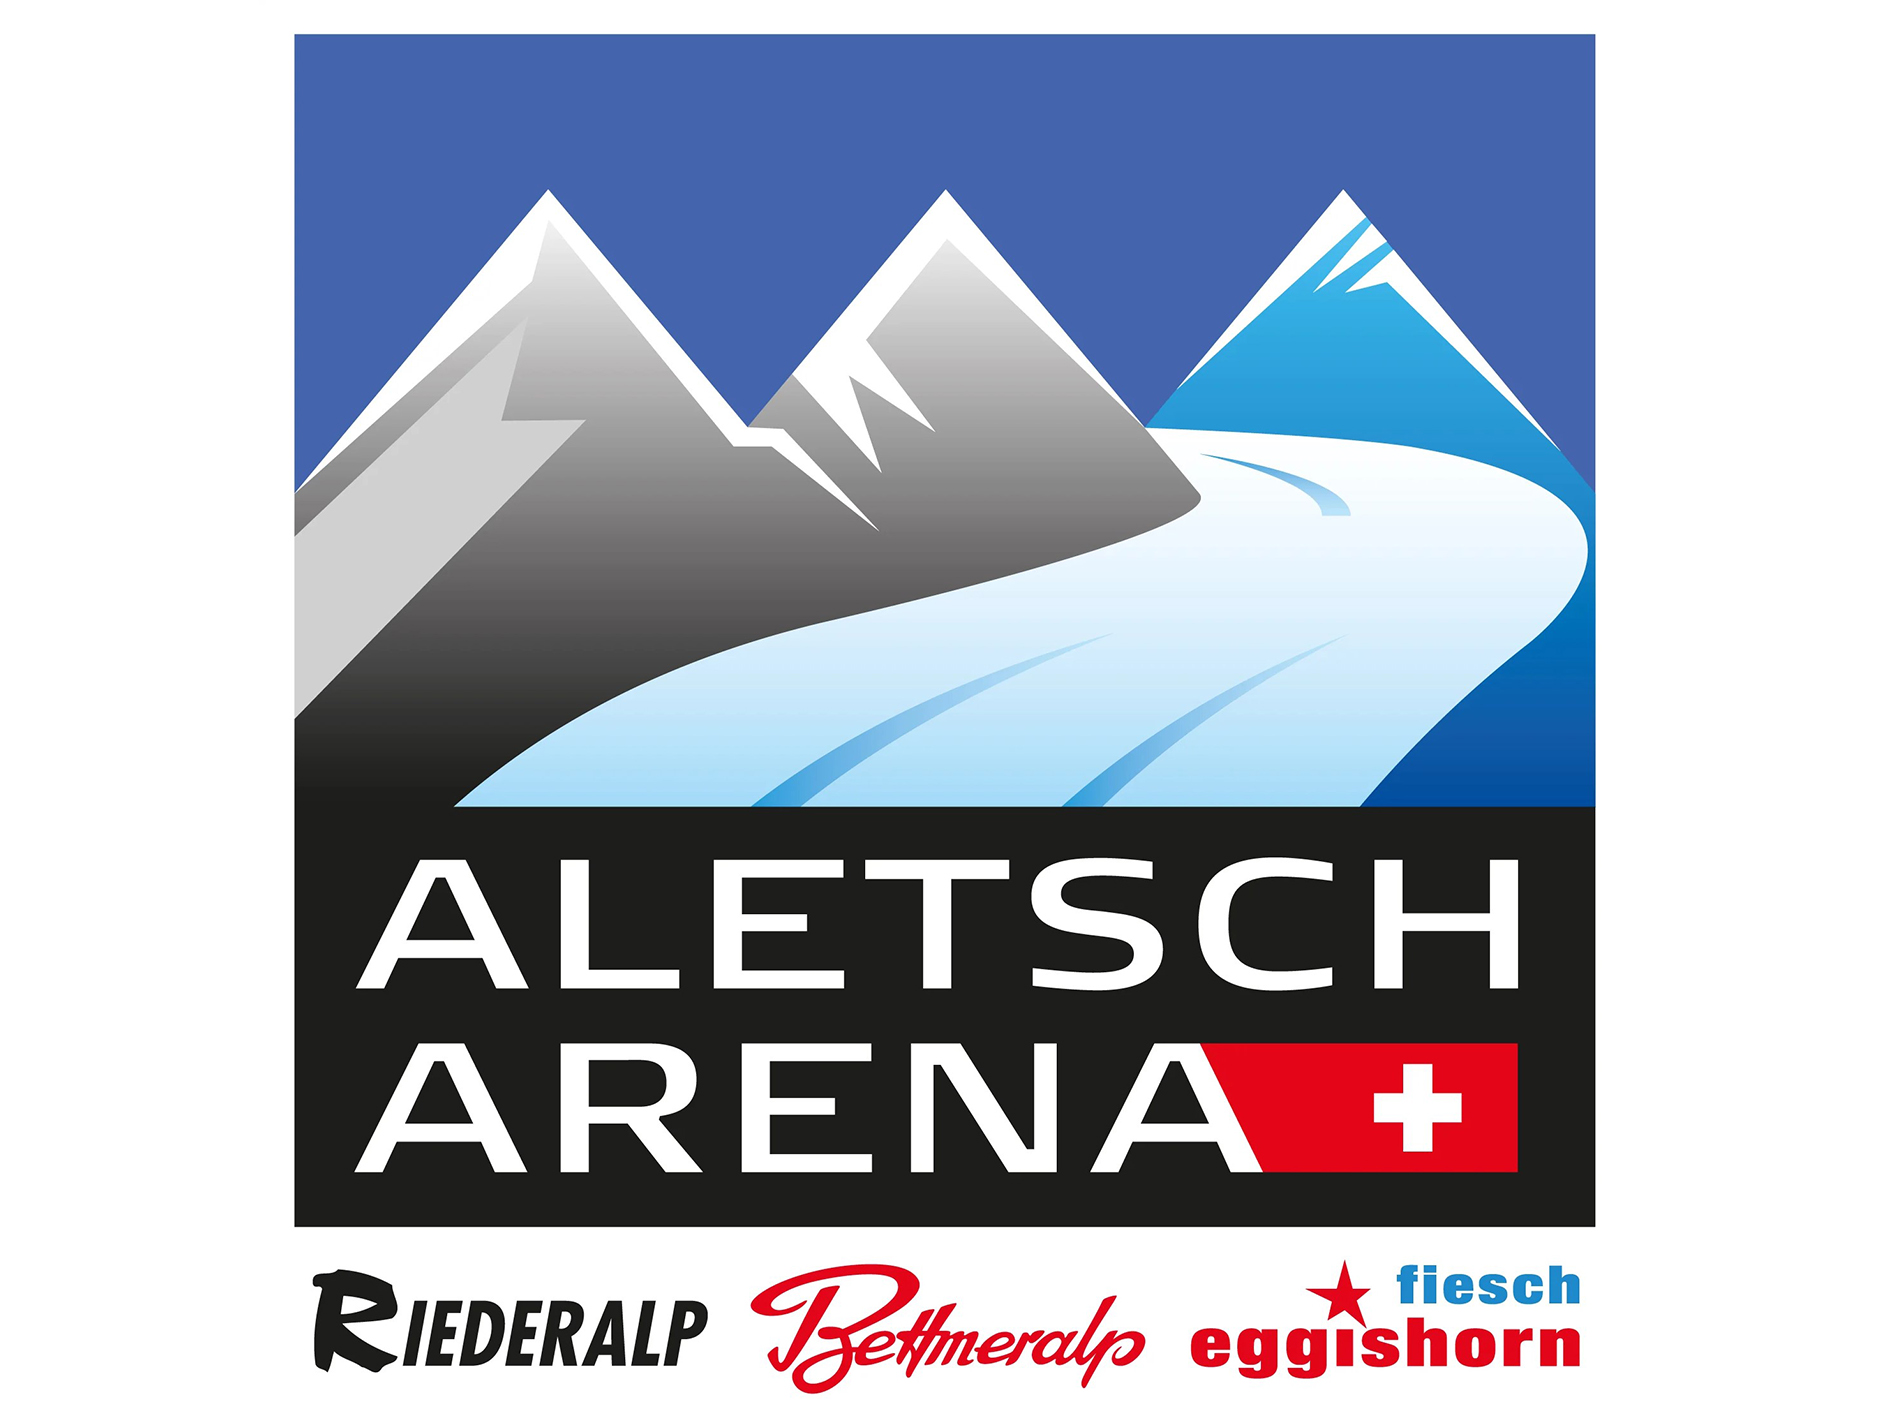 aletsch arena